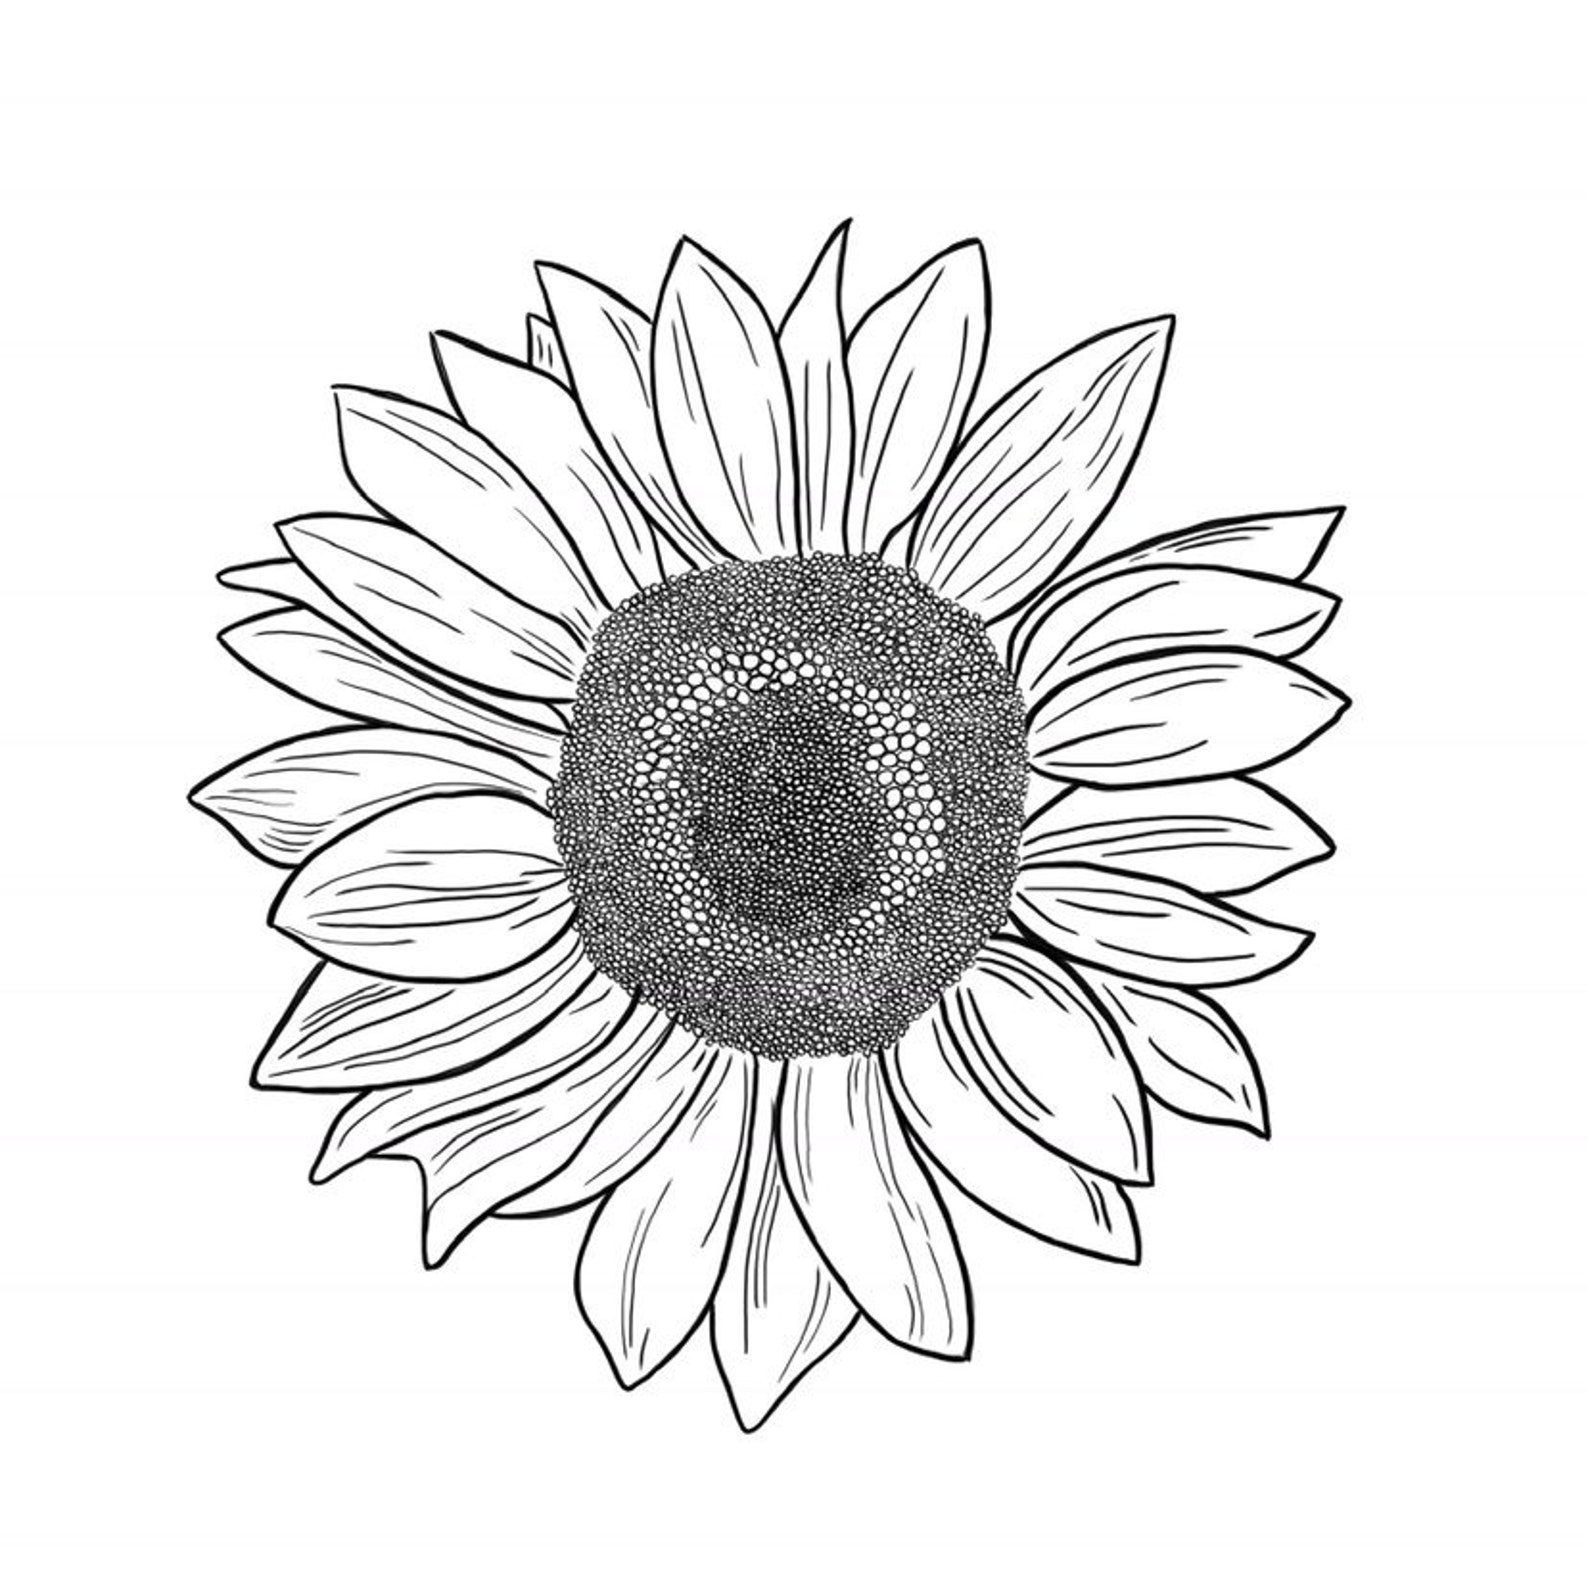 Digital Square Sunflower Illustration | Etsy